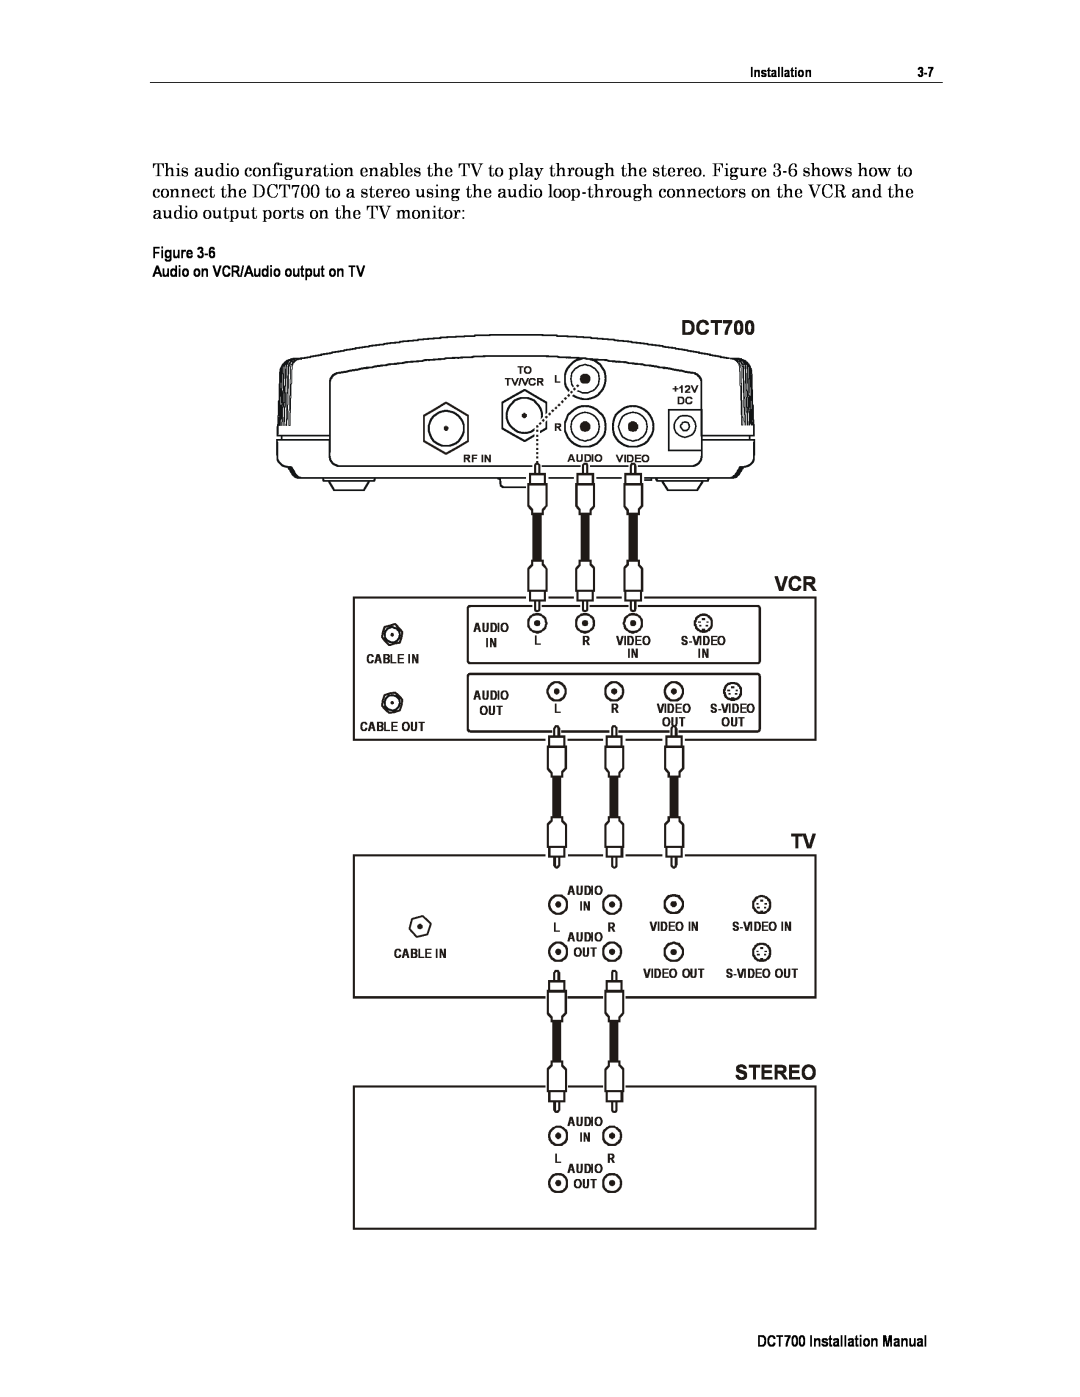 Motorola DTC700 Stereo, Figure Audio on VCR/Audio output on TV, DCT700 Installation Manual, Installation3-7 